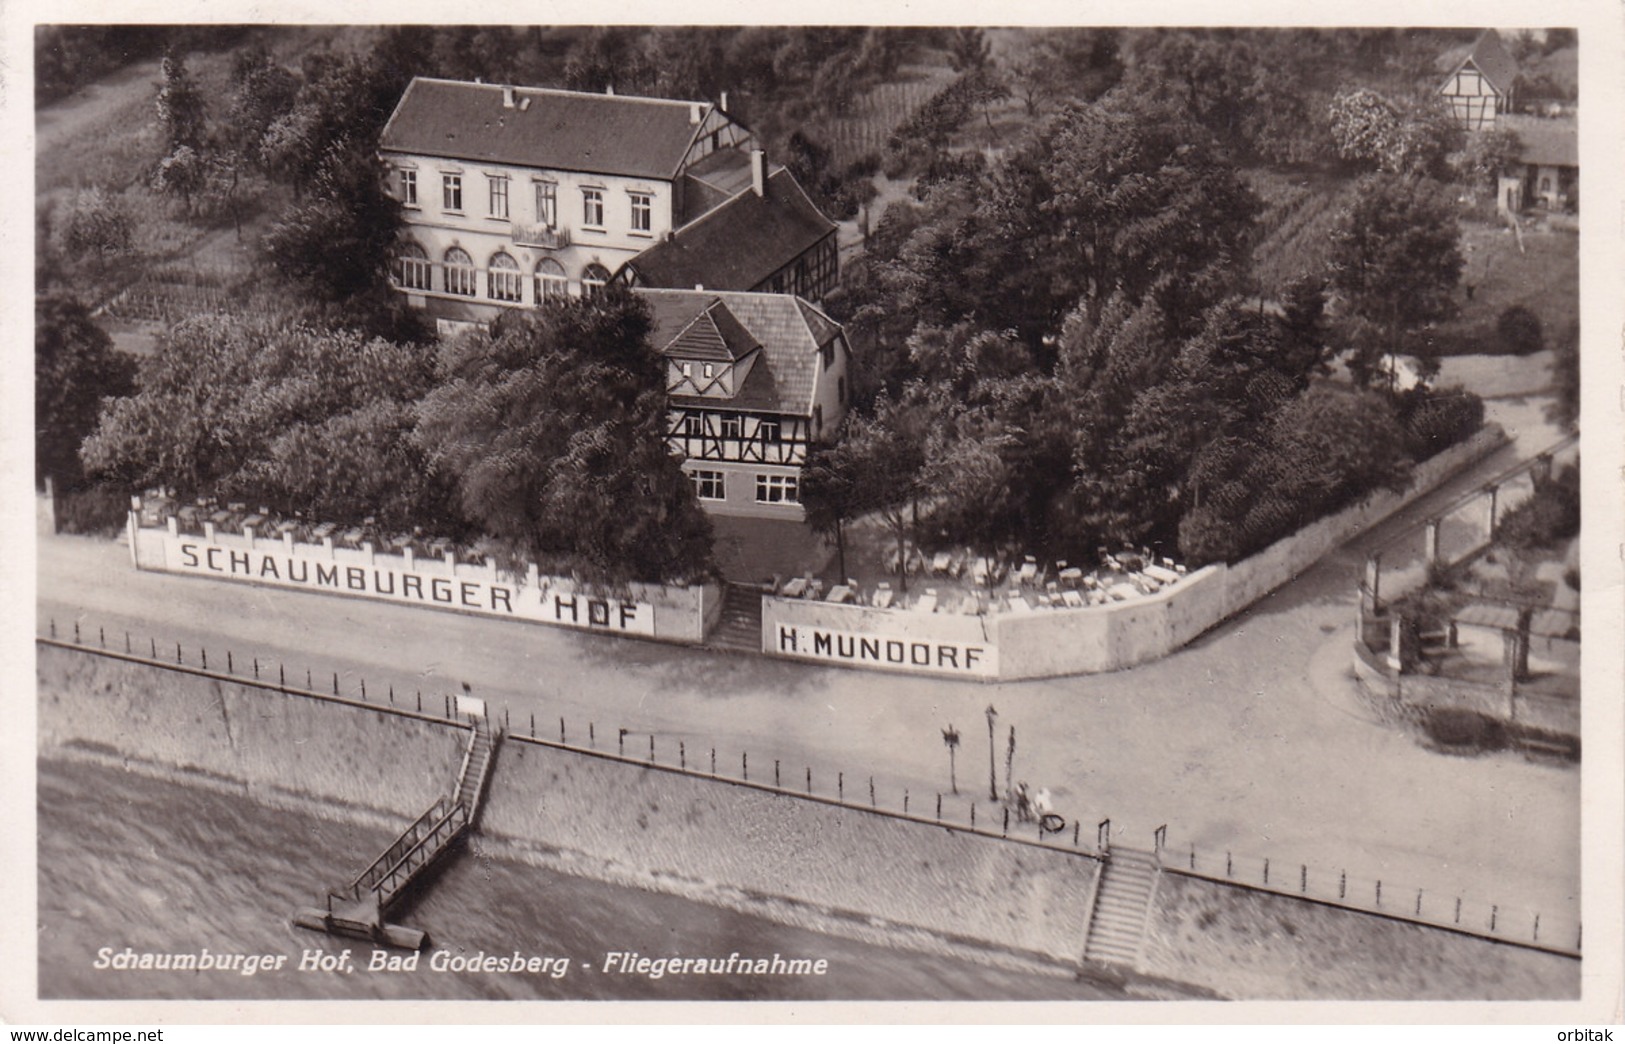 Bad Godesberg (Bonn) * Luftbild, Hotel Schaumburger Hof, Hafen, Fluss, Ufer * AK946 - Bonn